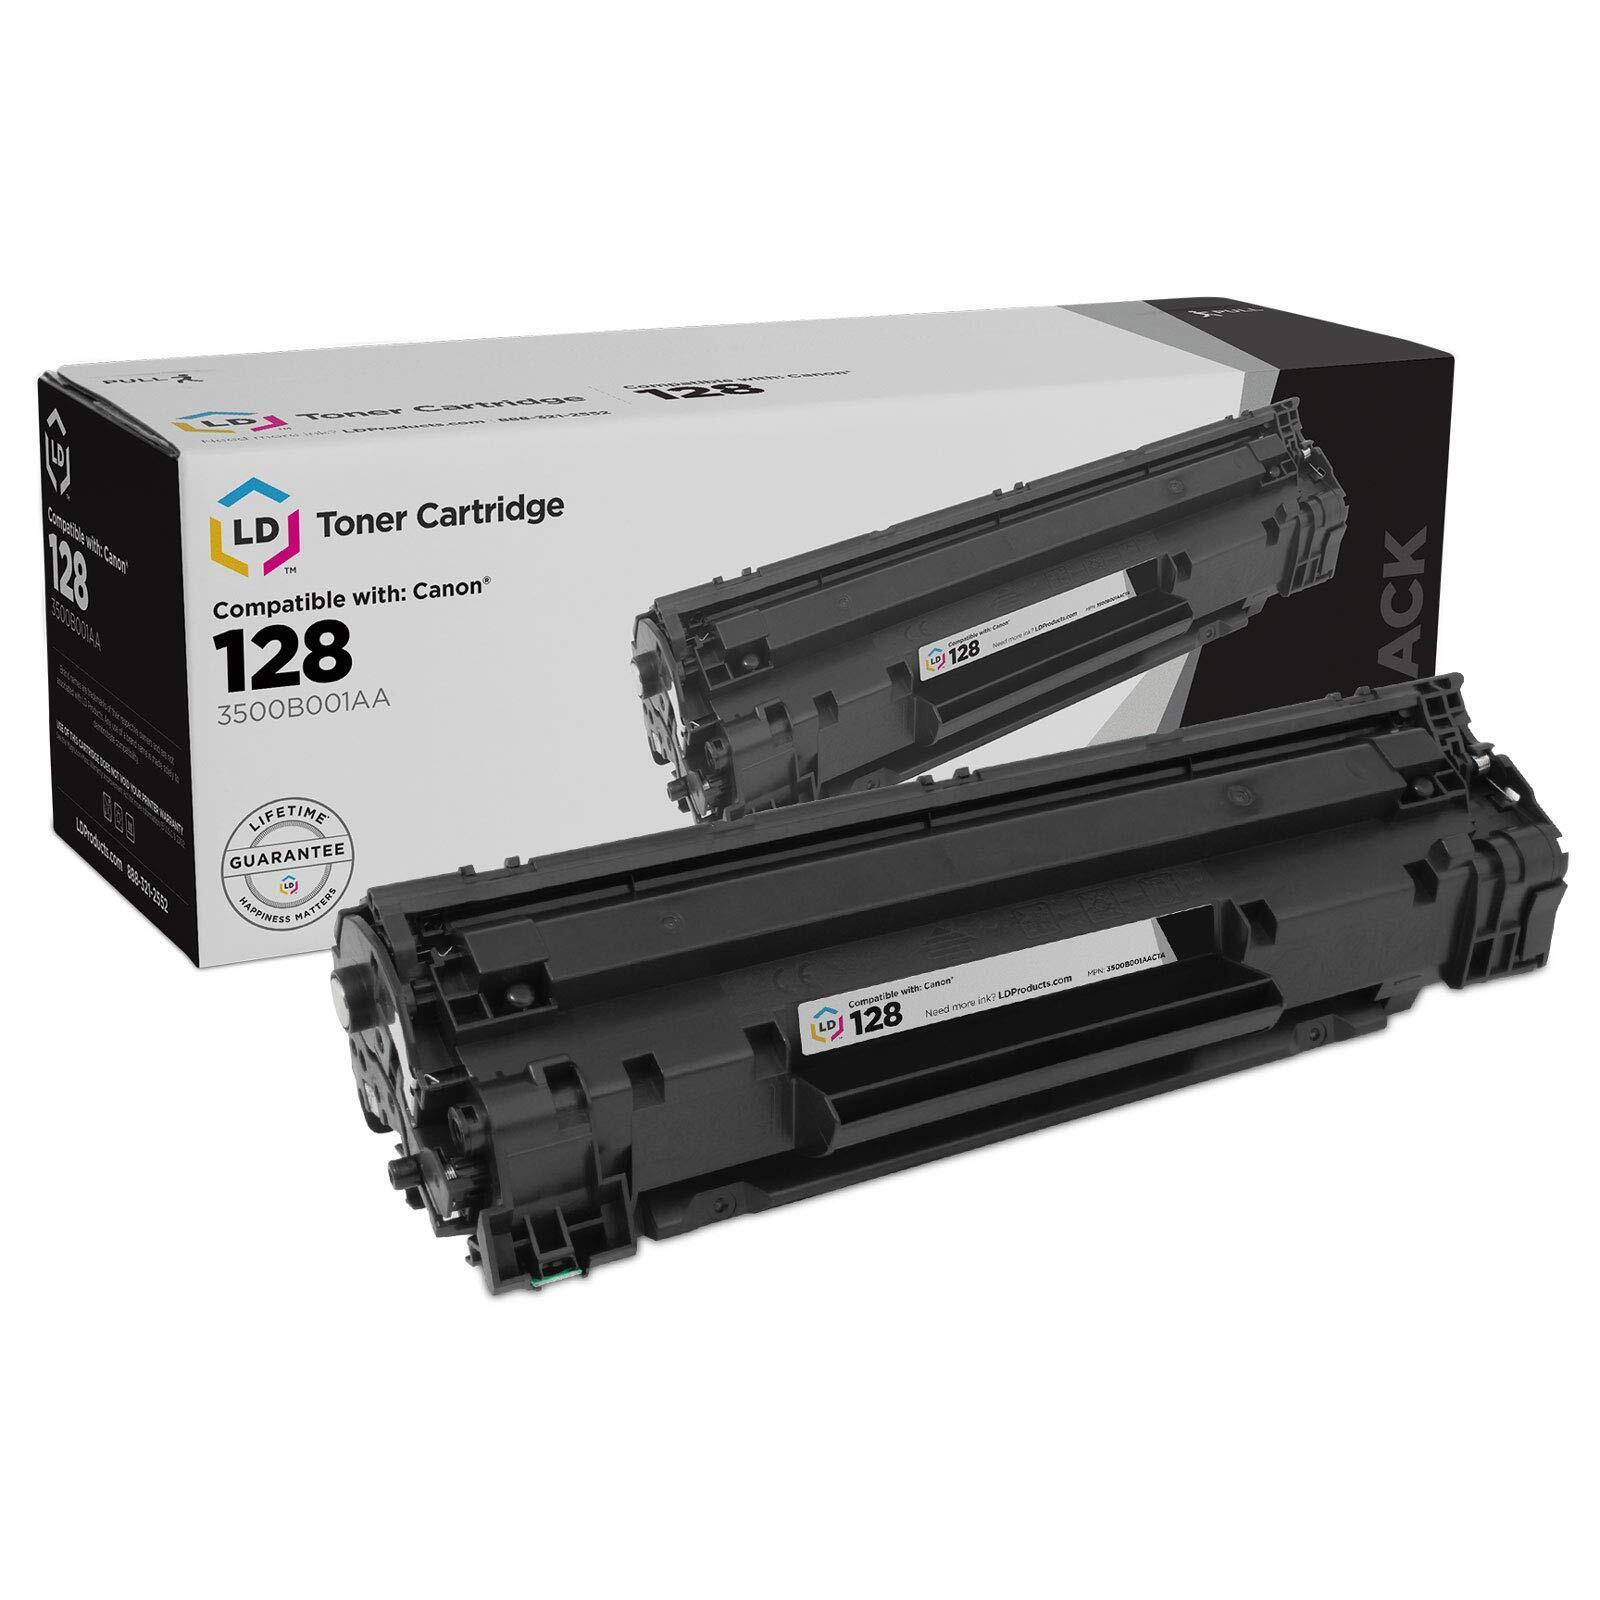 LD 3500B001AA 128 Black Laser Toner Cartridge for Canon Printer